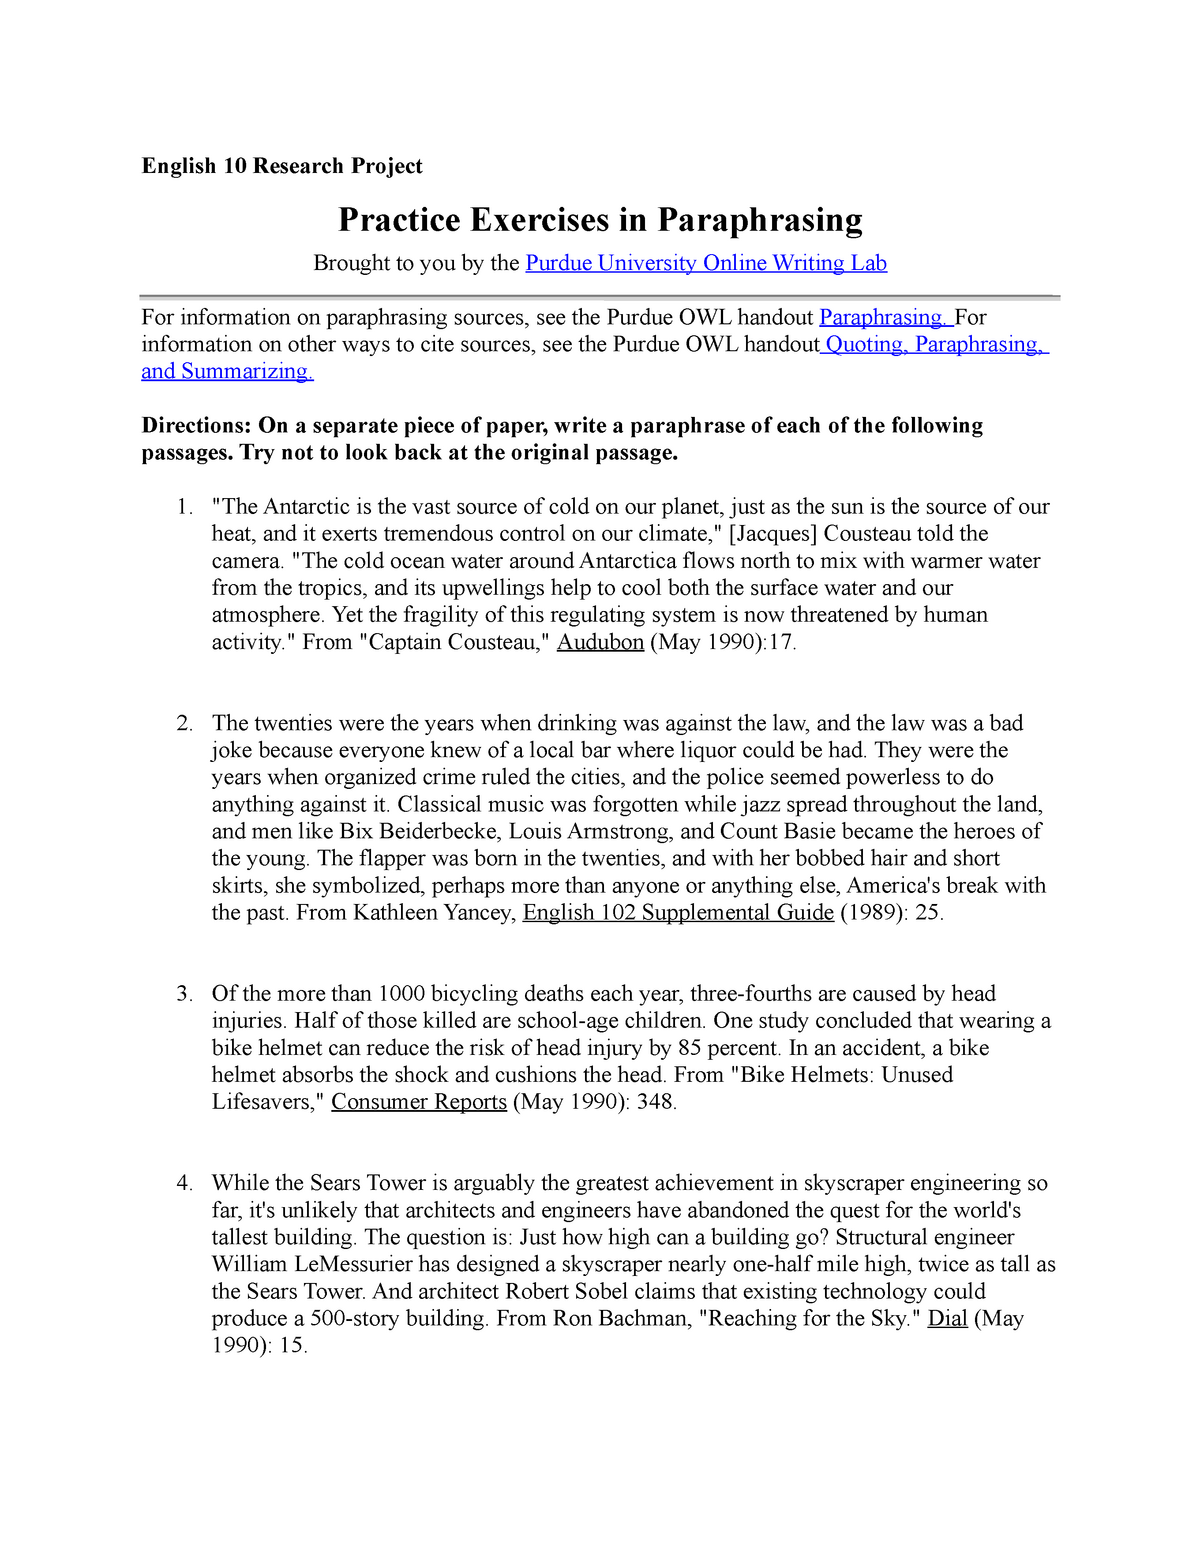 paraphrasing and summarizing exercises with answers